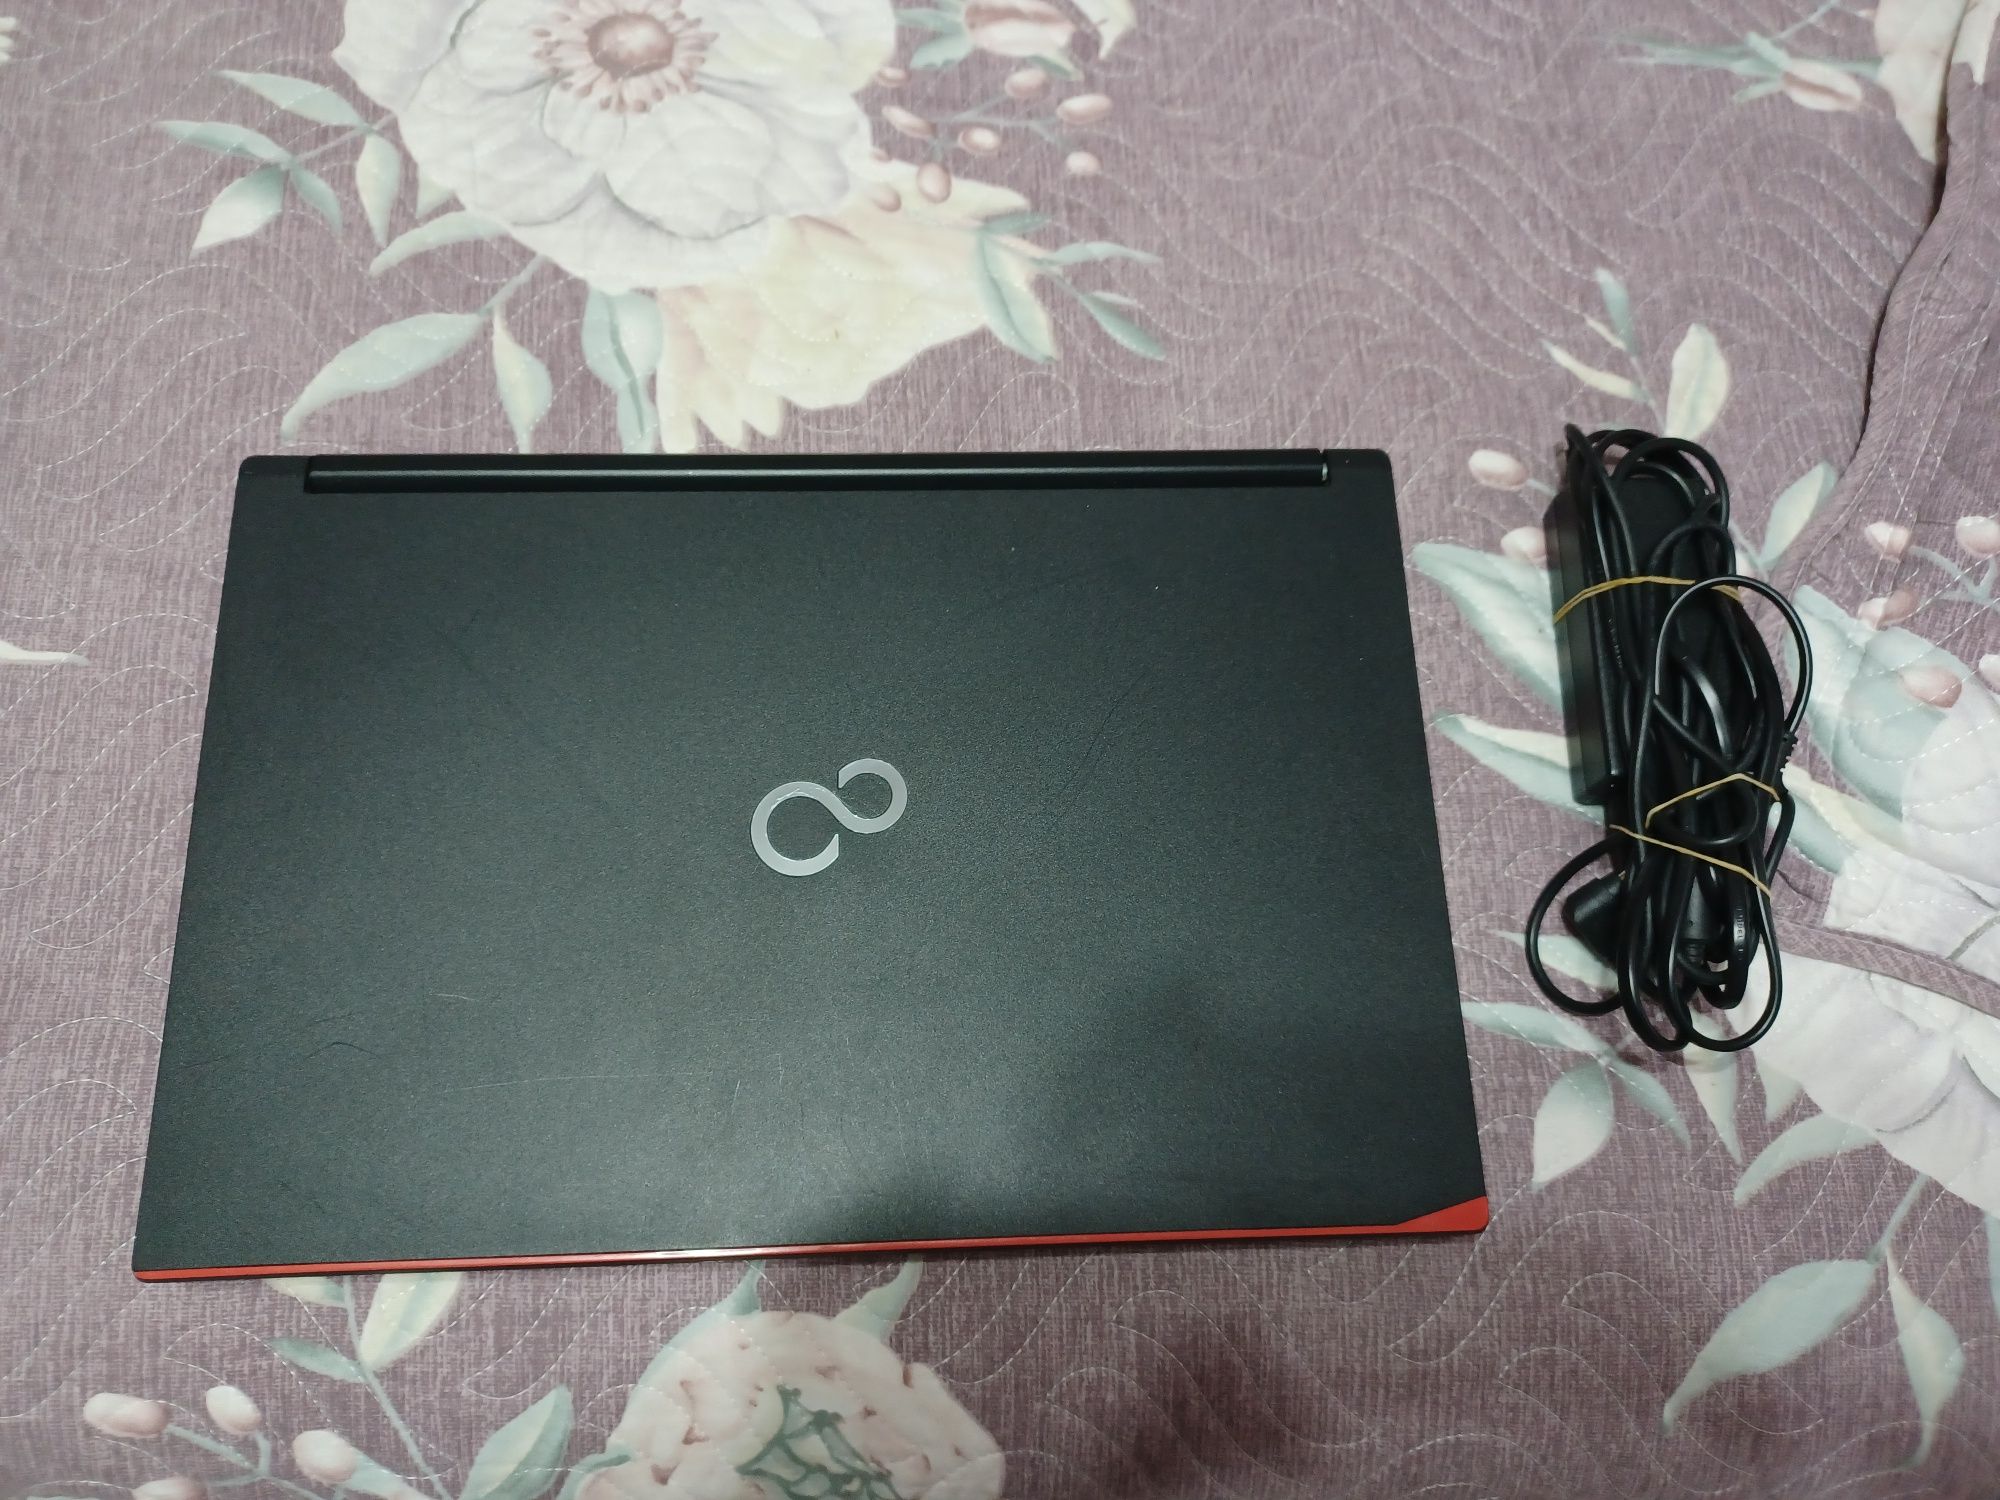 Laptop Fujitsu LifebookA744/K Intel i3-4000,15.6inci webcam